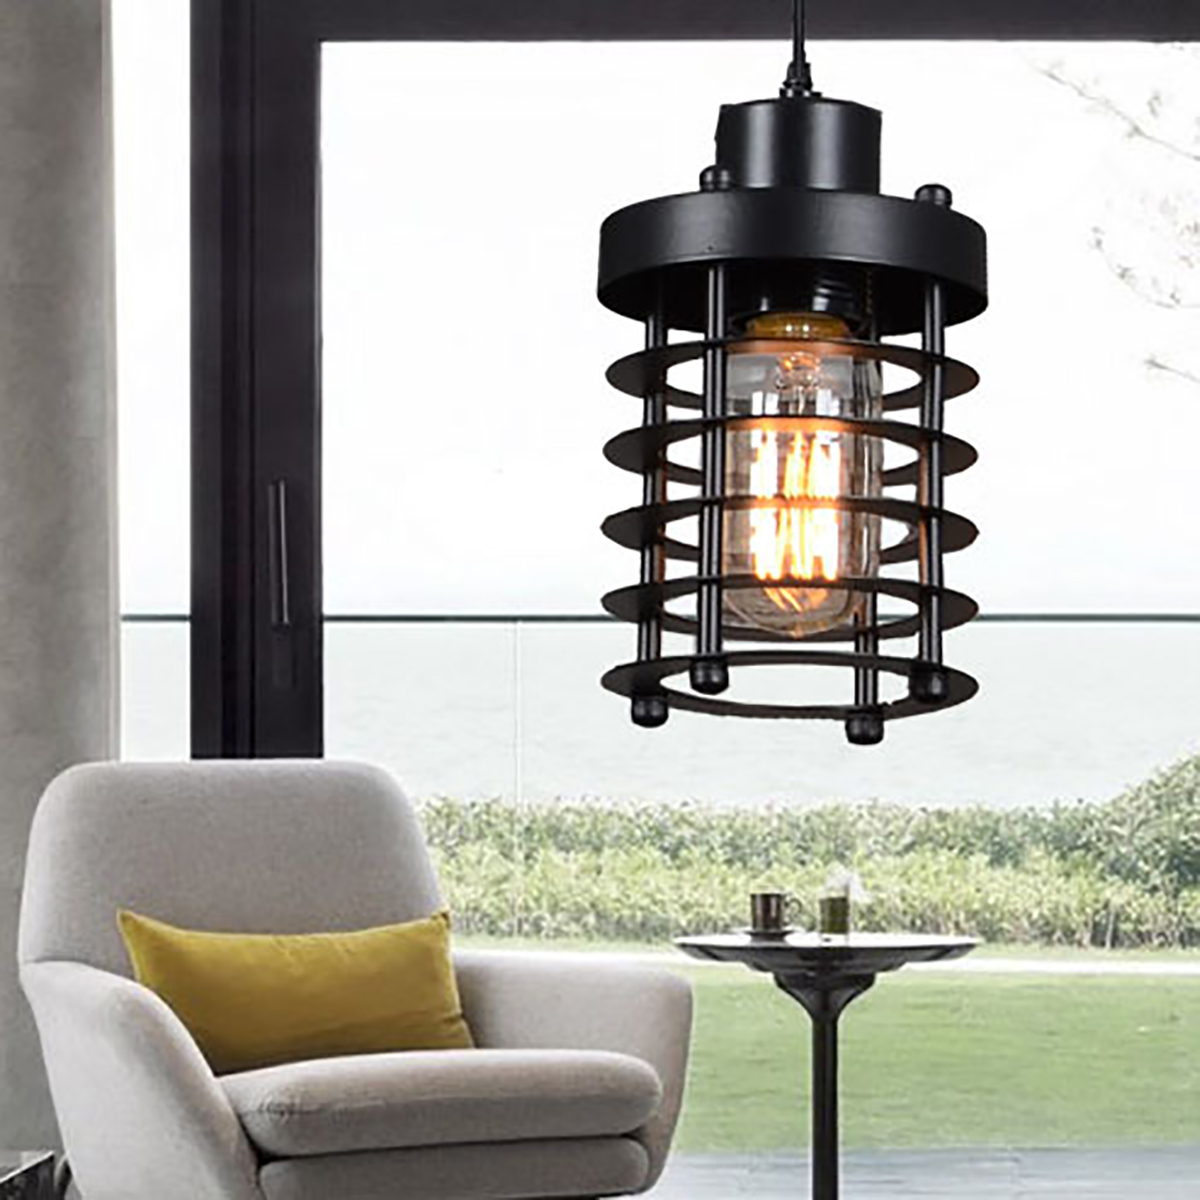 E27-Modern-Iron-Pendant-Light-Ceiling-Lamp-Chandelier-Bedroom-Home-Fixture-Decor-Without-Bulb-1710126-3